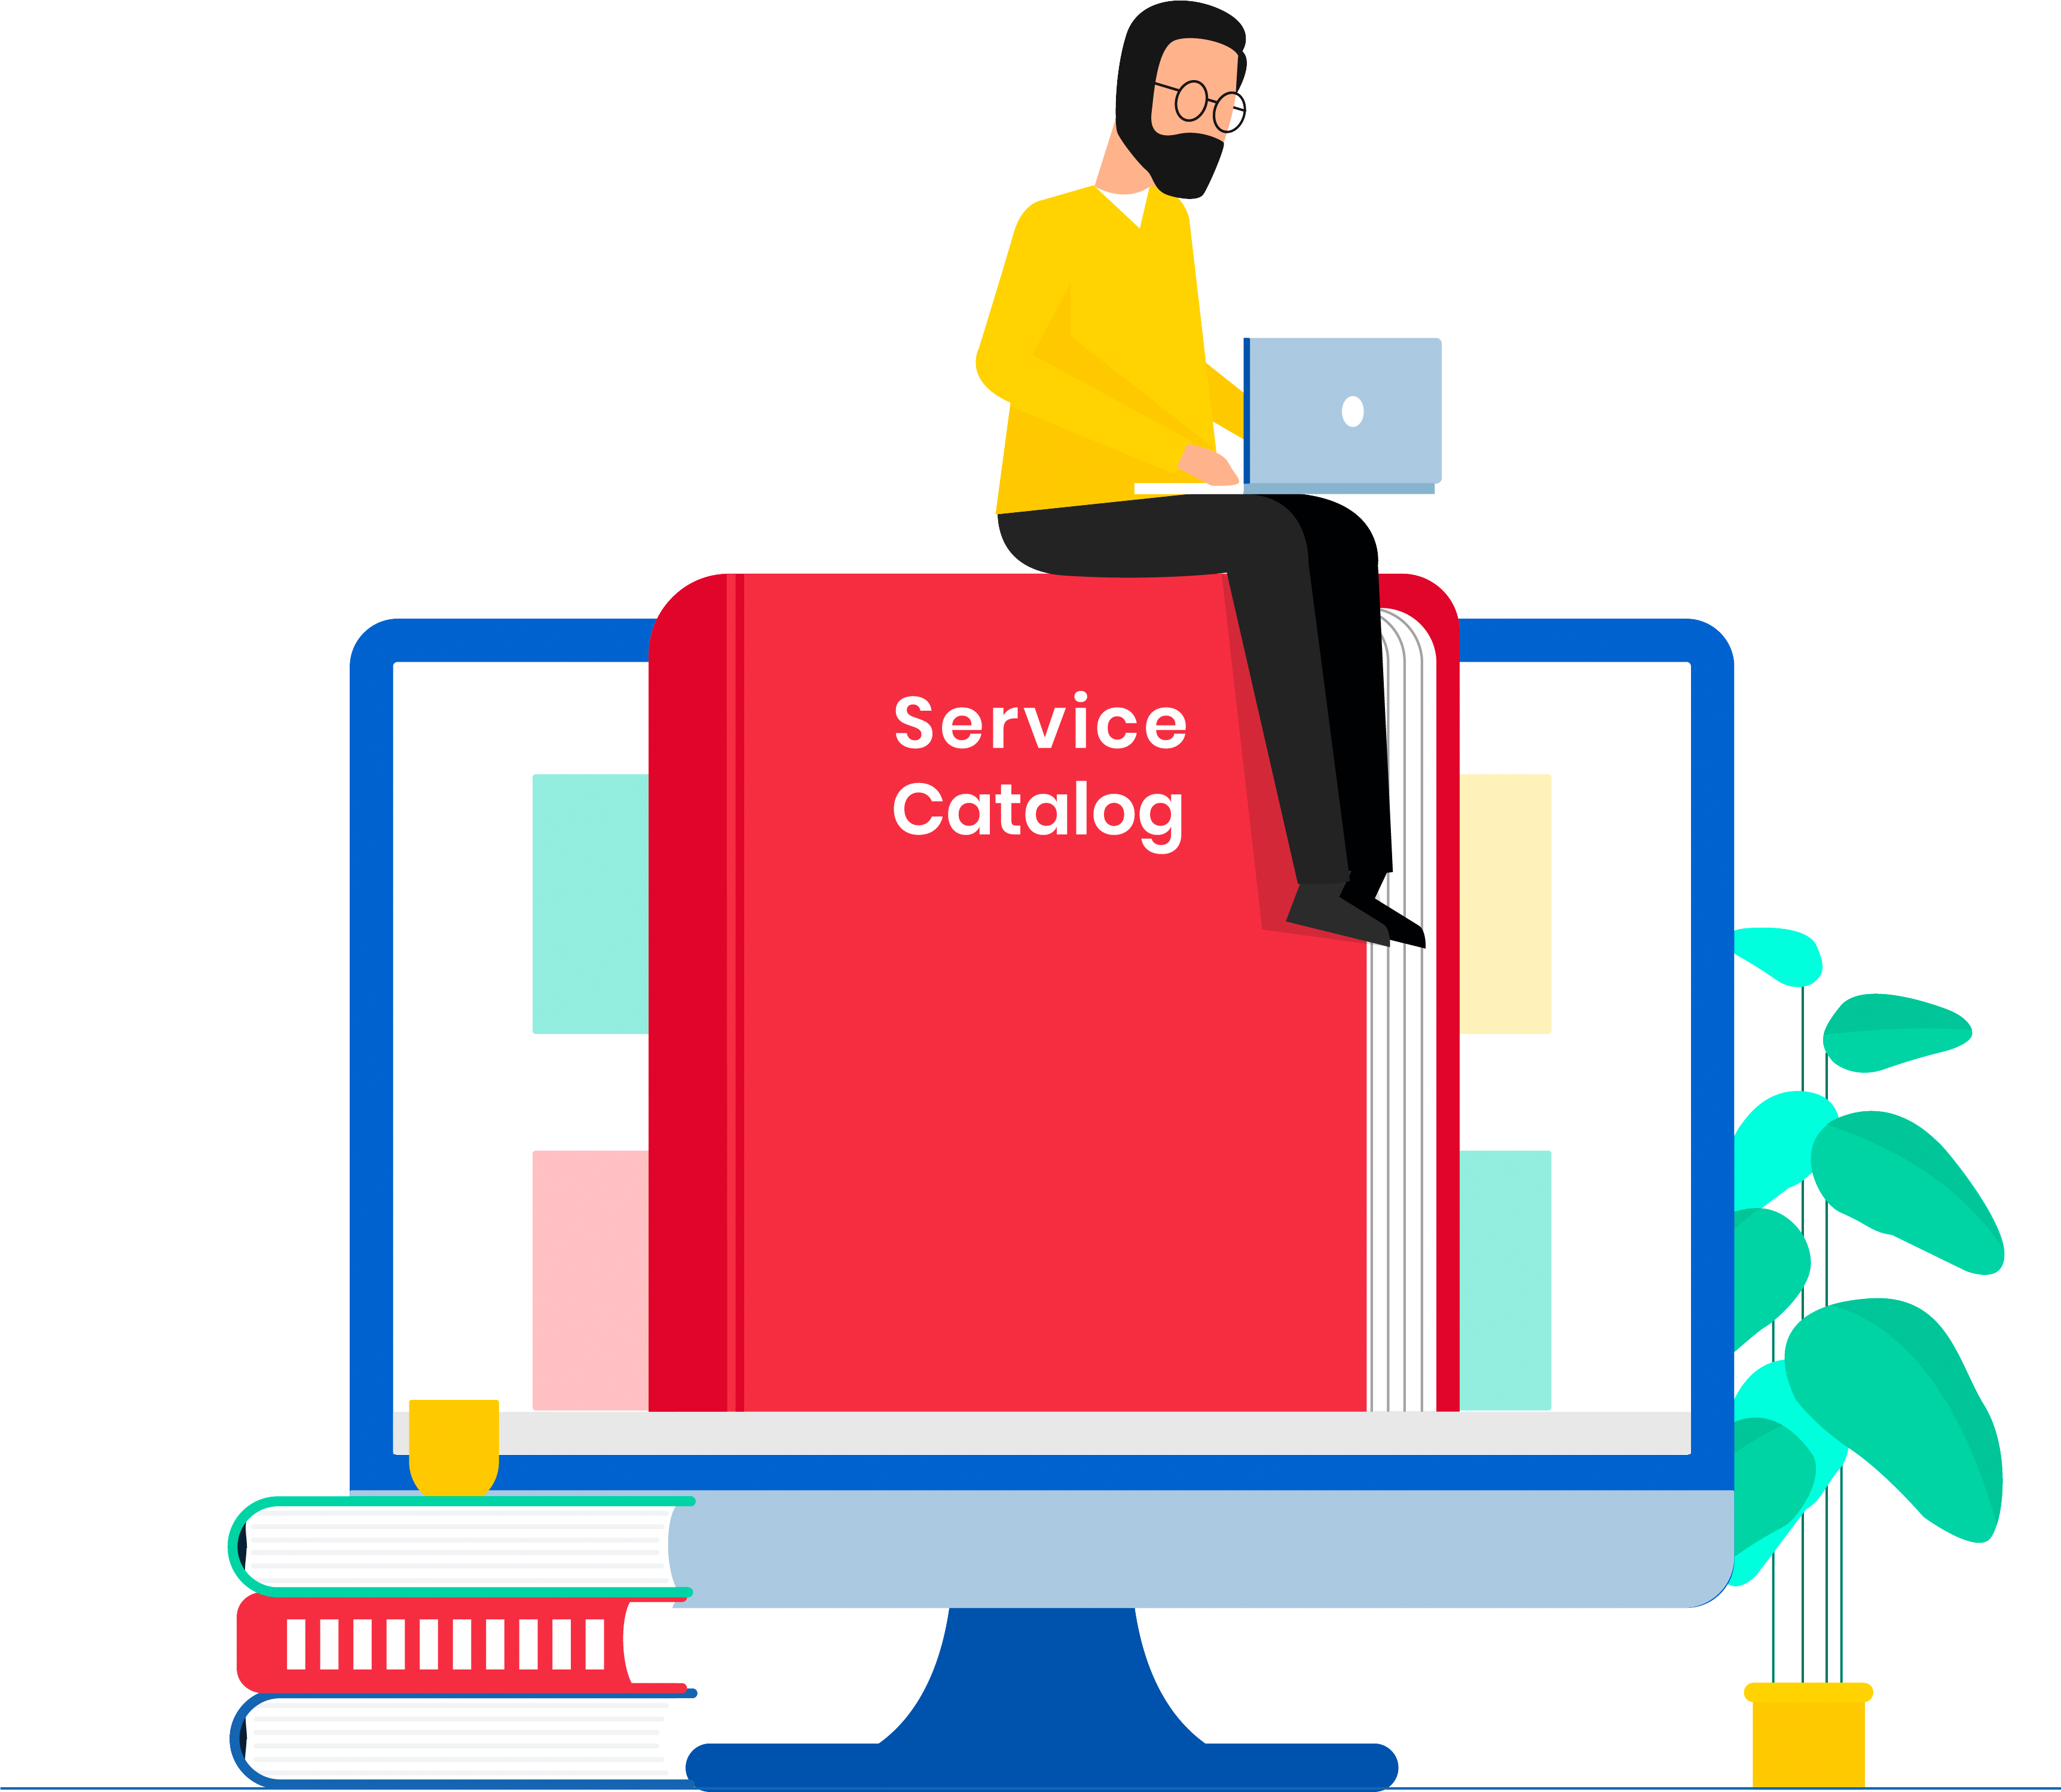 ITIL service catalog guide